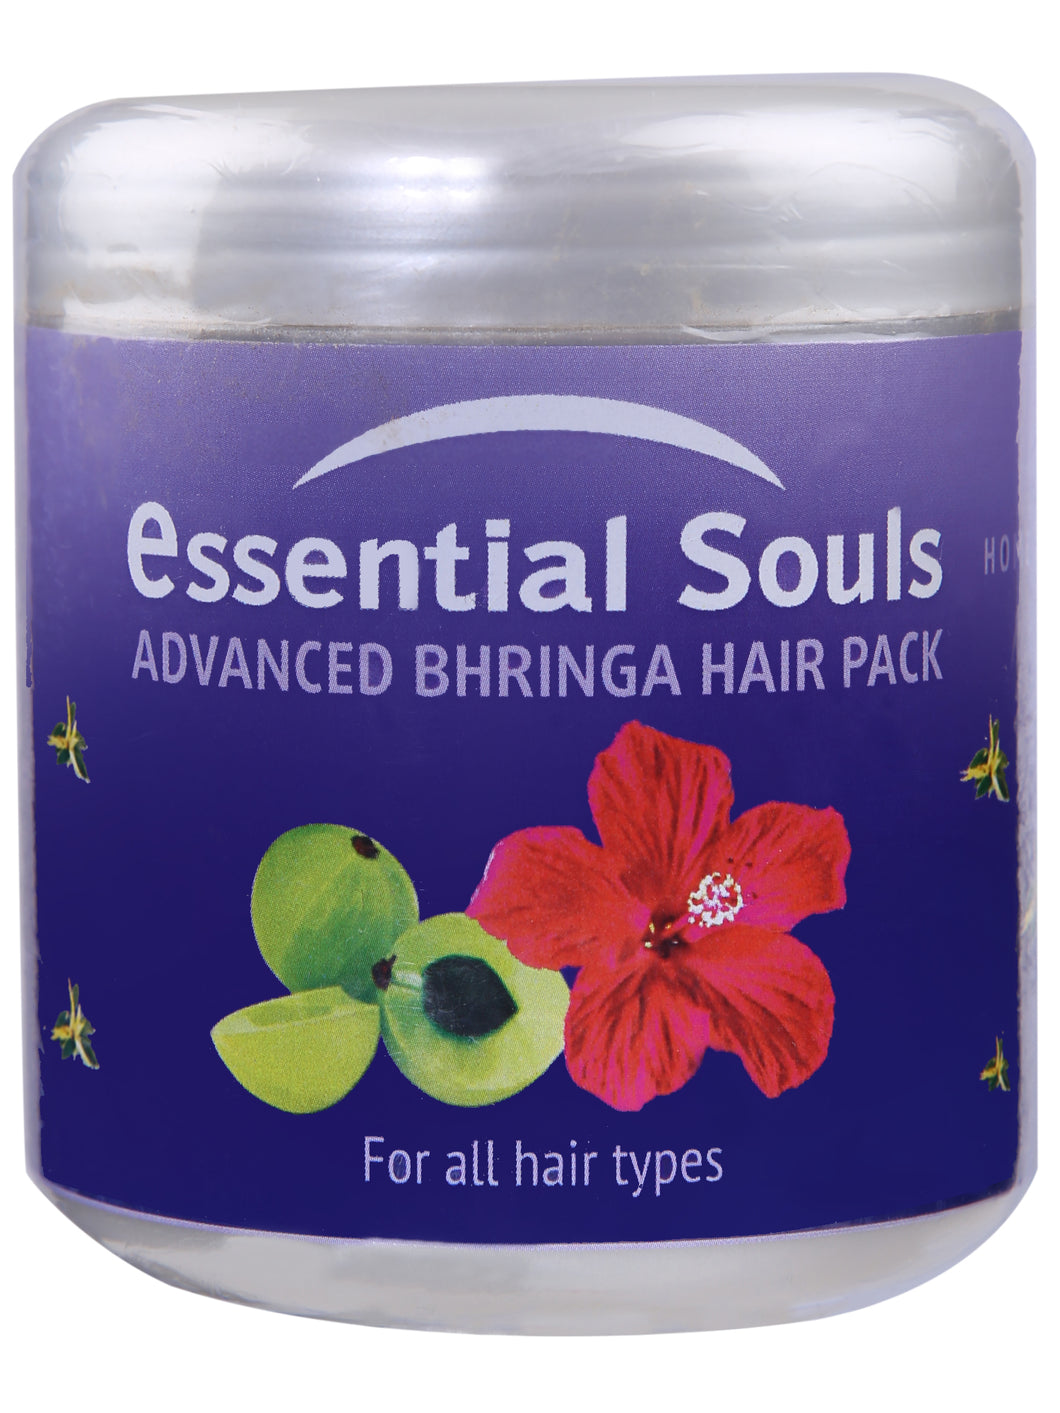 Essential Souls Advanced Bhringa Hair Pack - 135g